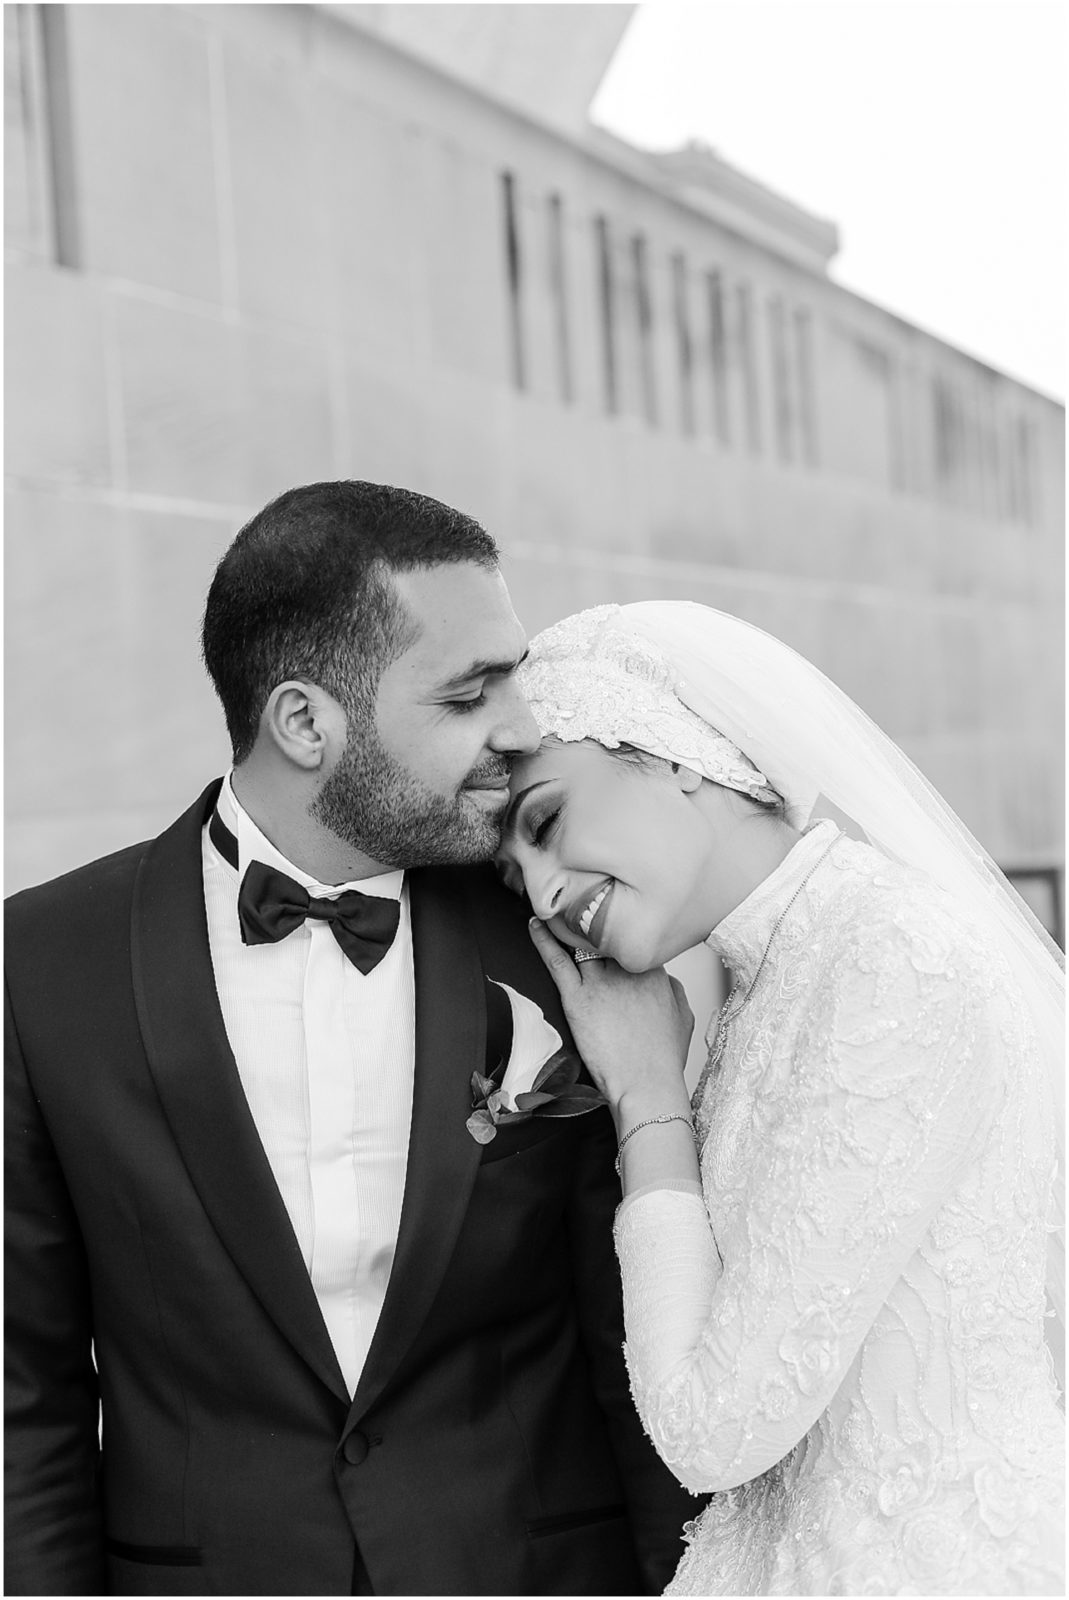 cute black and white wedding photo - muslim bride and groom - kansas city wedding photographer - nelson atkins museum 